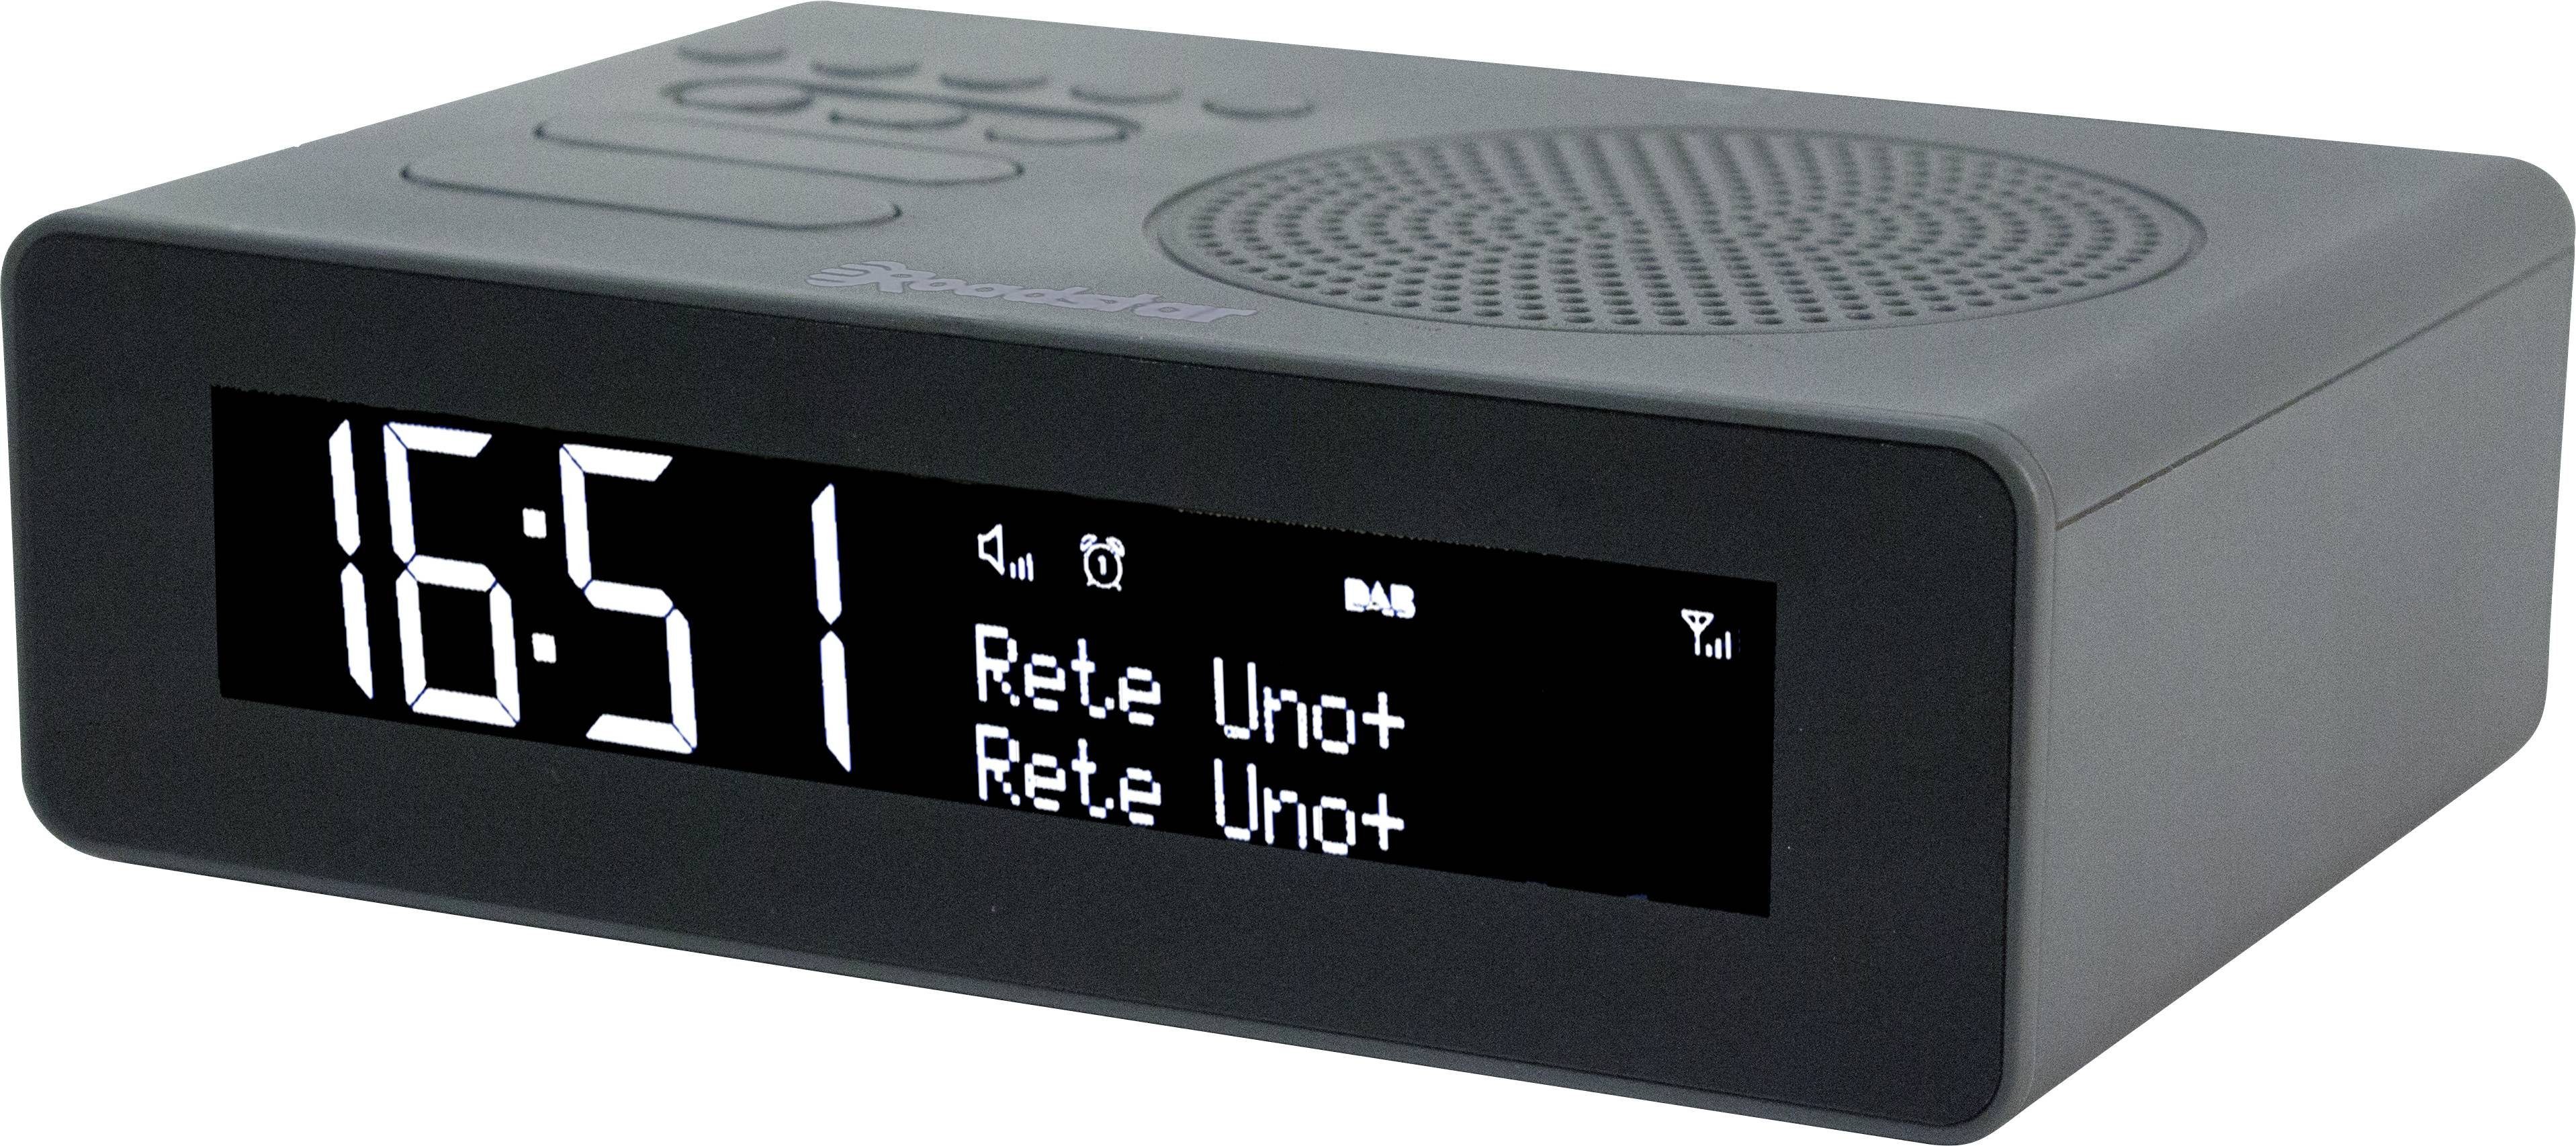 Roadstar »Roadstar CLR-290 black Tischradio DAB+ USB, DAB+, UKW Schwarz«  Radio online kaufen | OTTO